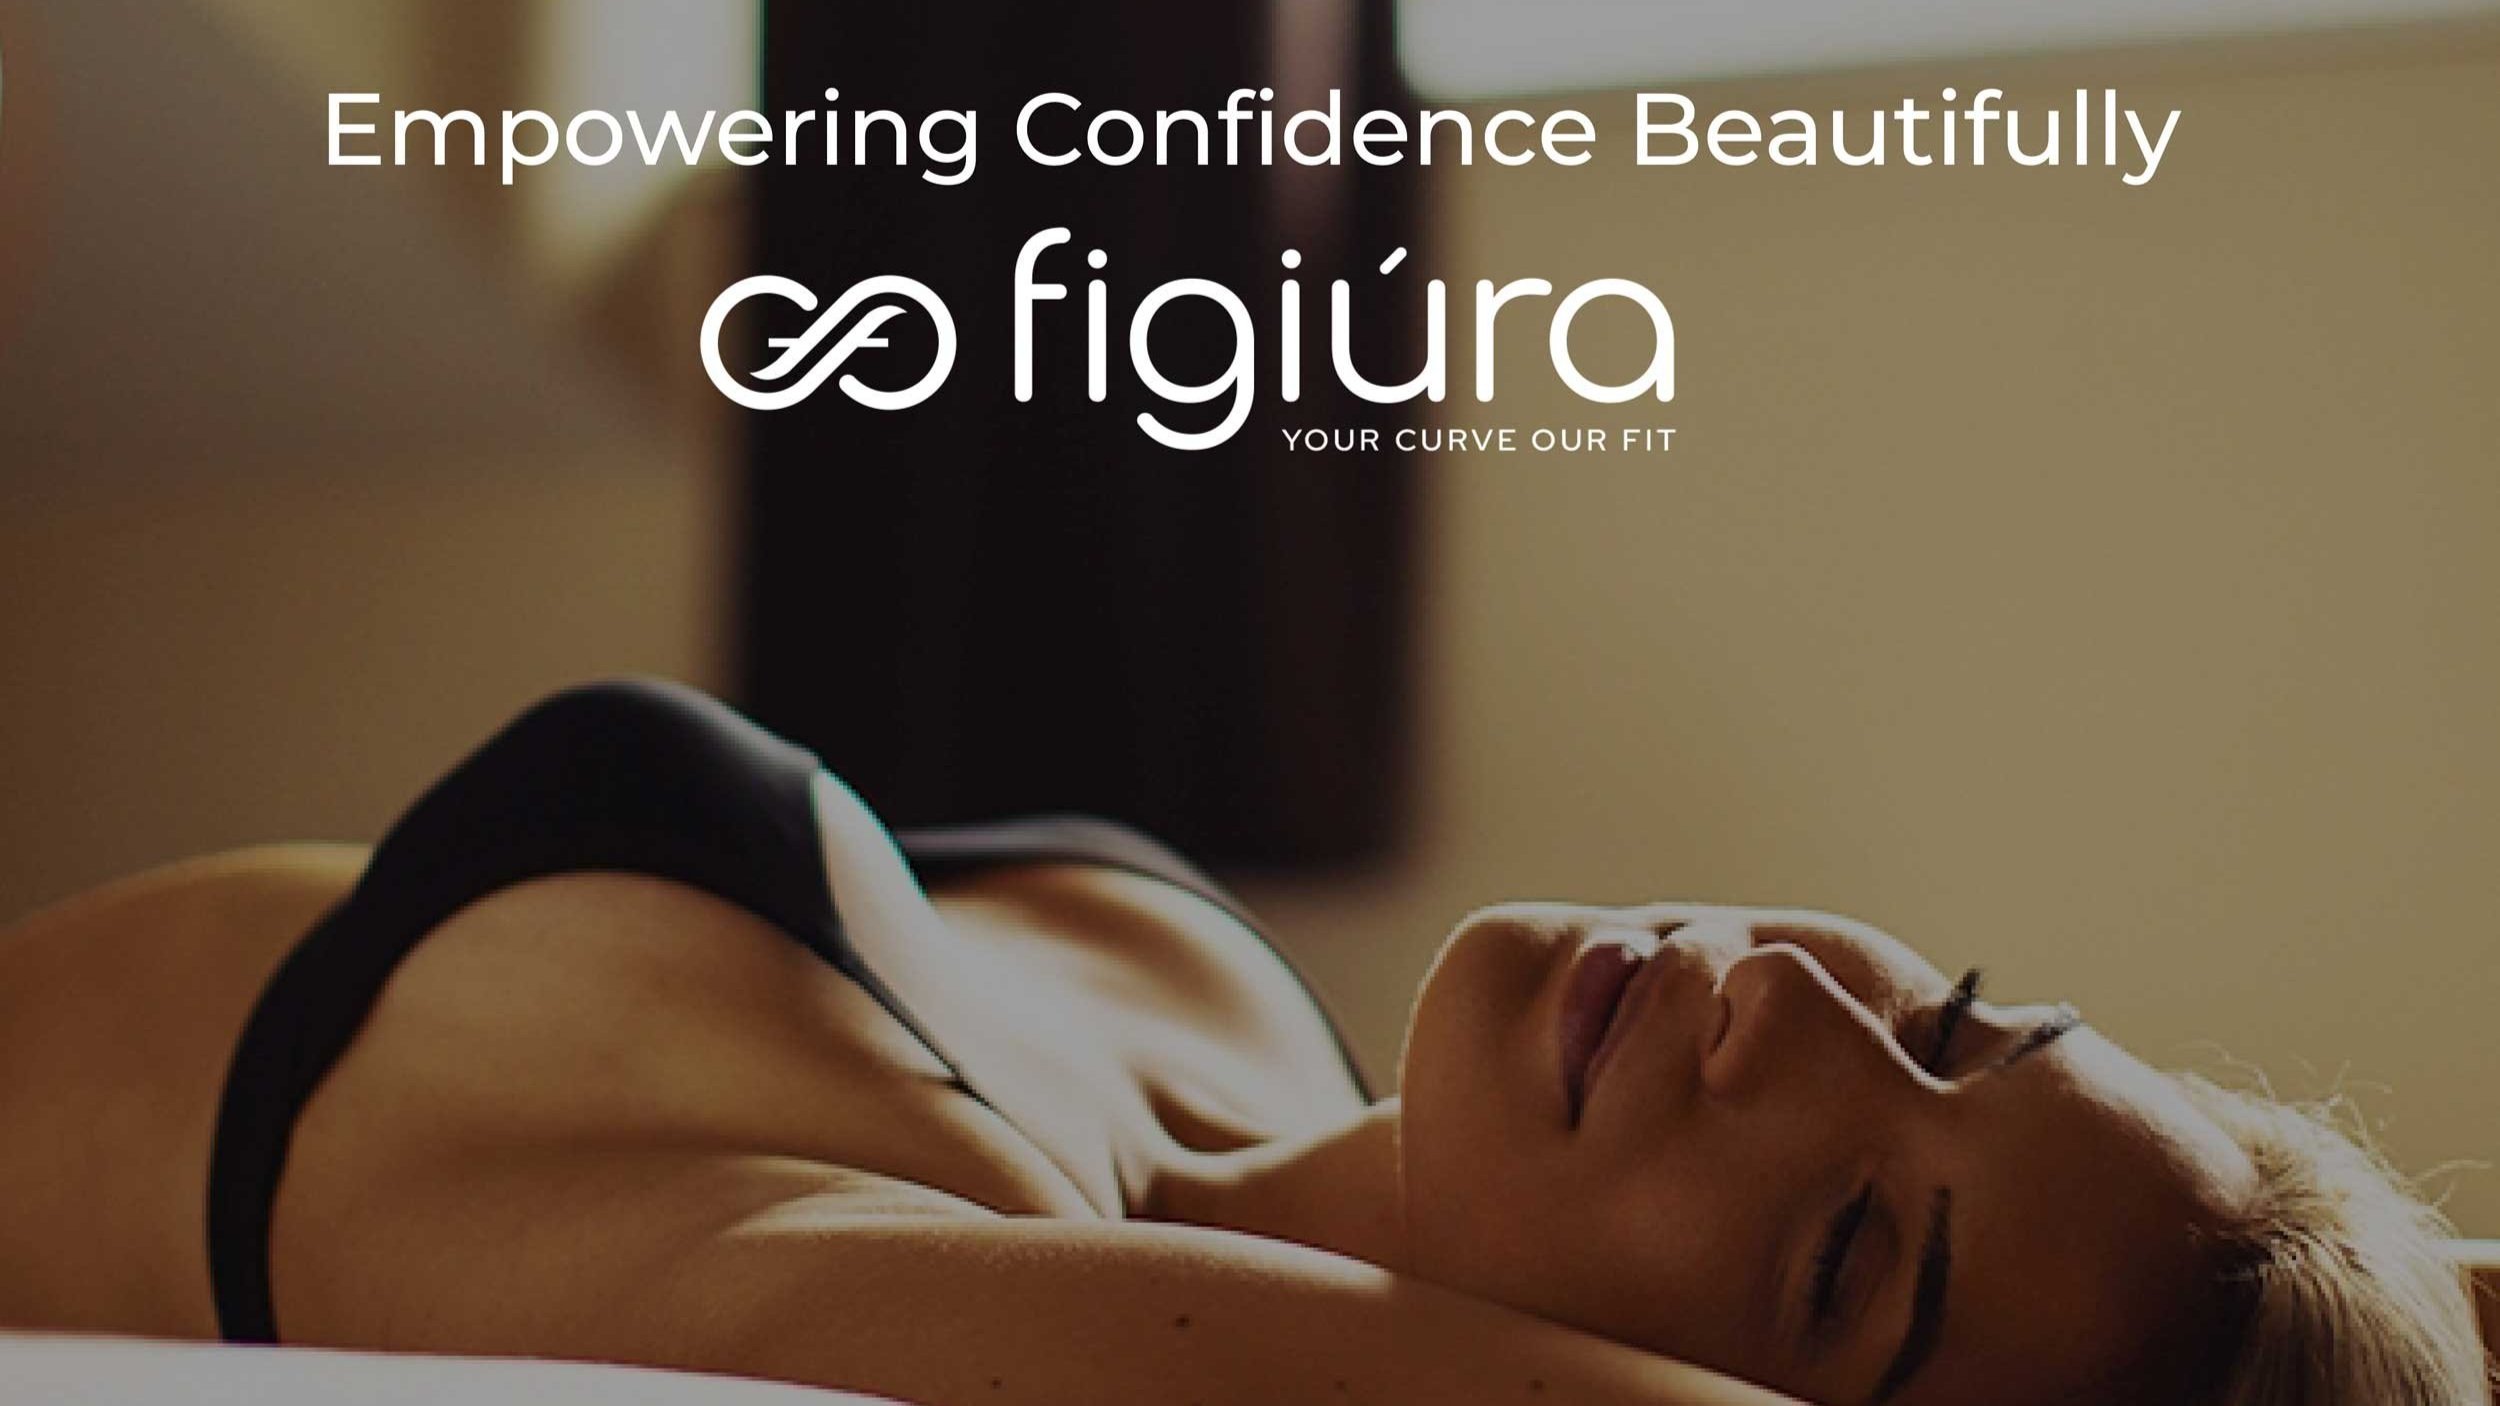 Image of Figiura home page